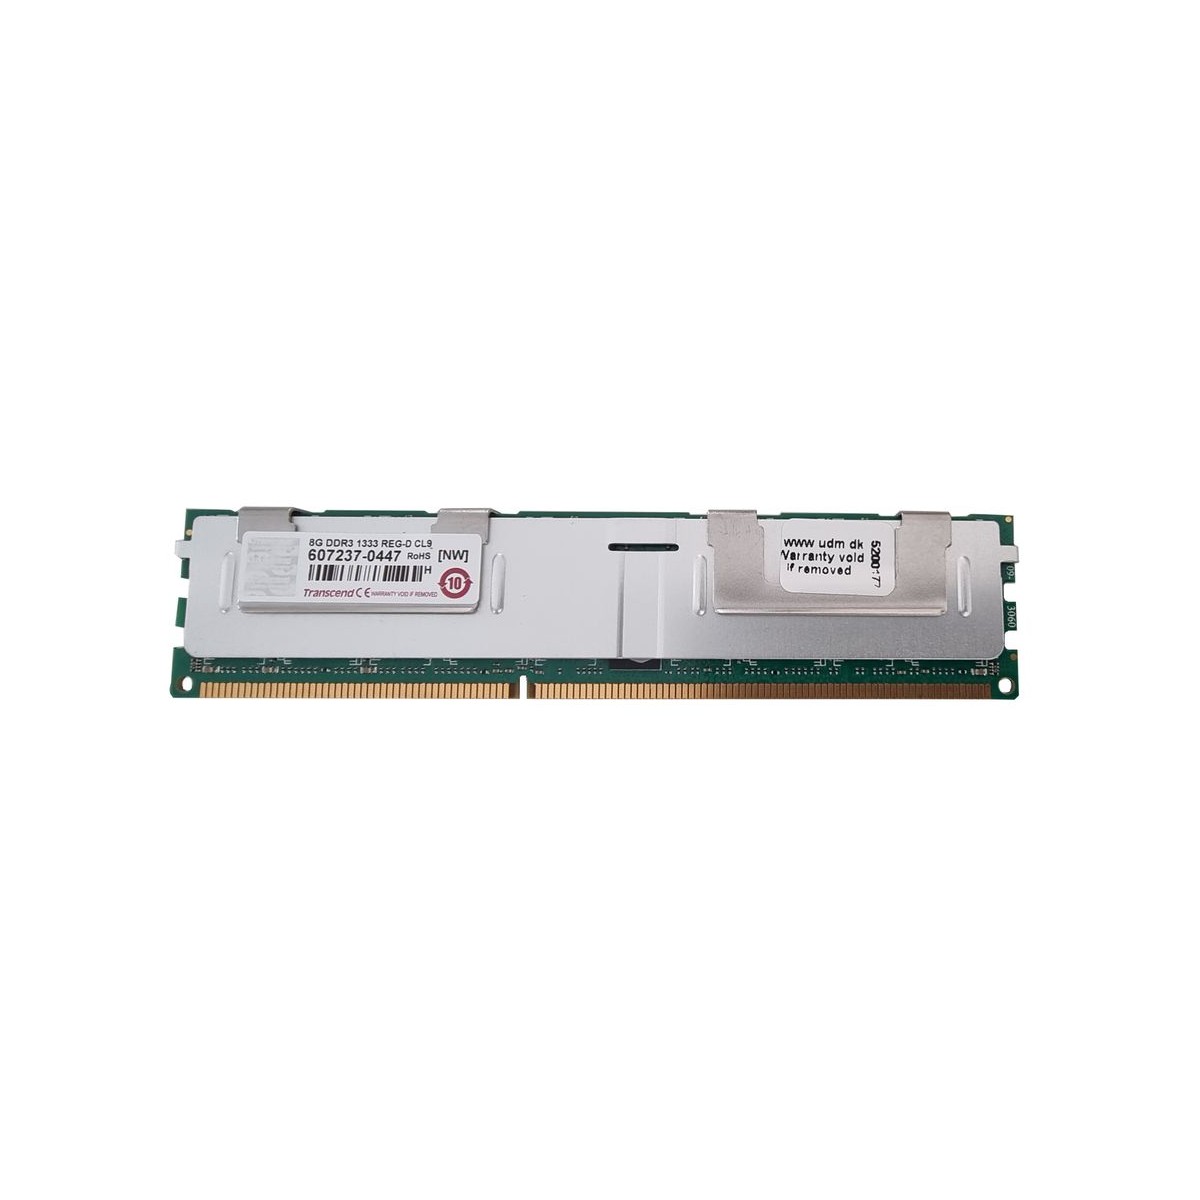 TRANSCEND 8GB DDR3 1333MHz ECC REG CL9 607237-0447